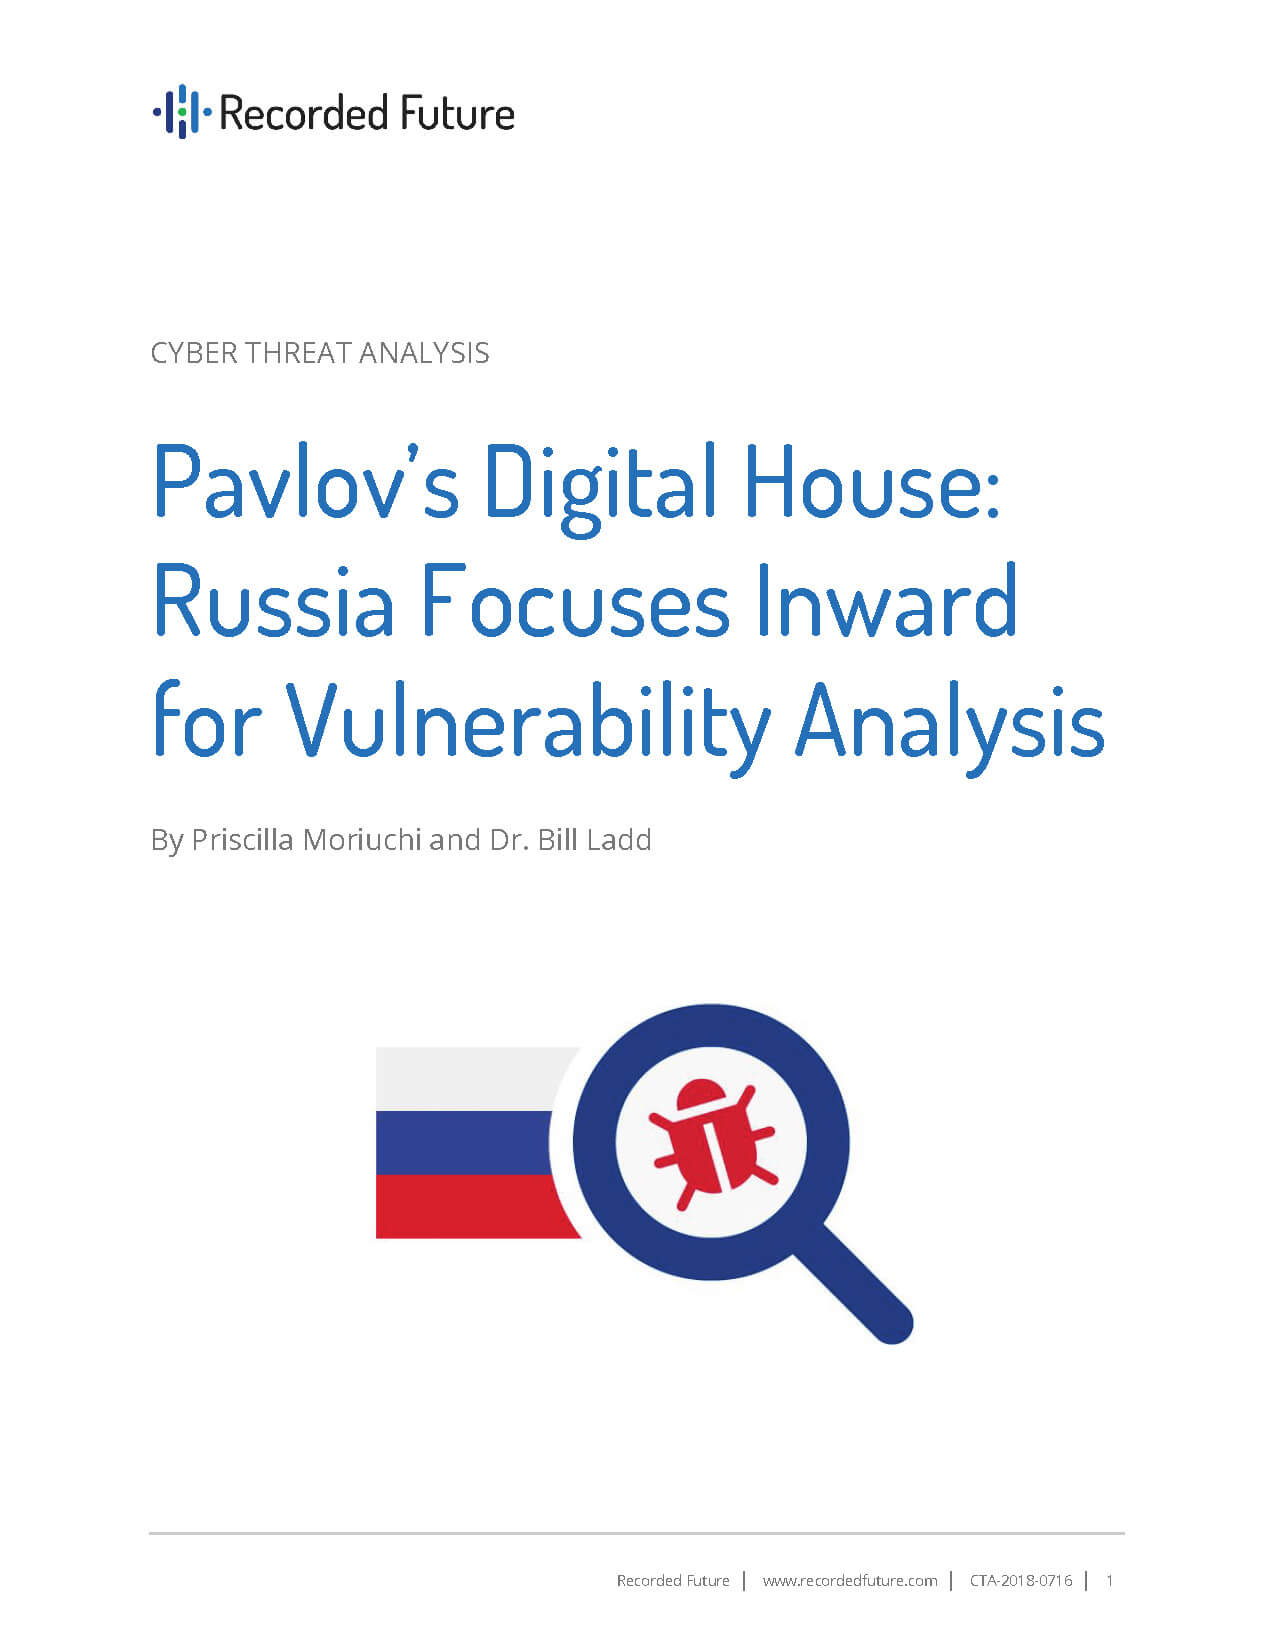 Pavlov’s Digital House: Russia Focuses Inward for Vulnerability Analysis